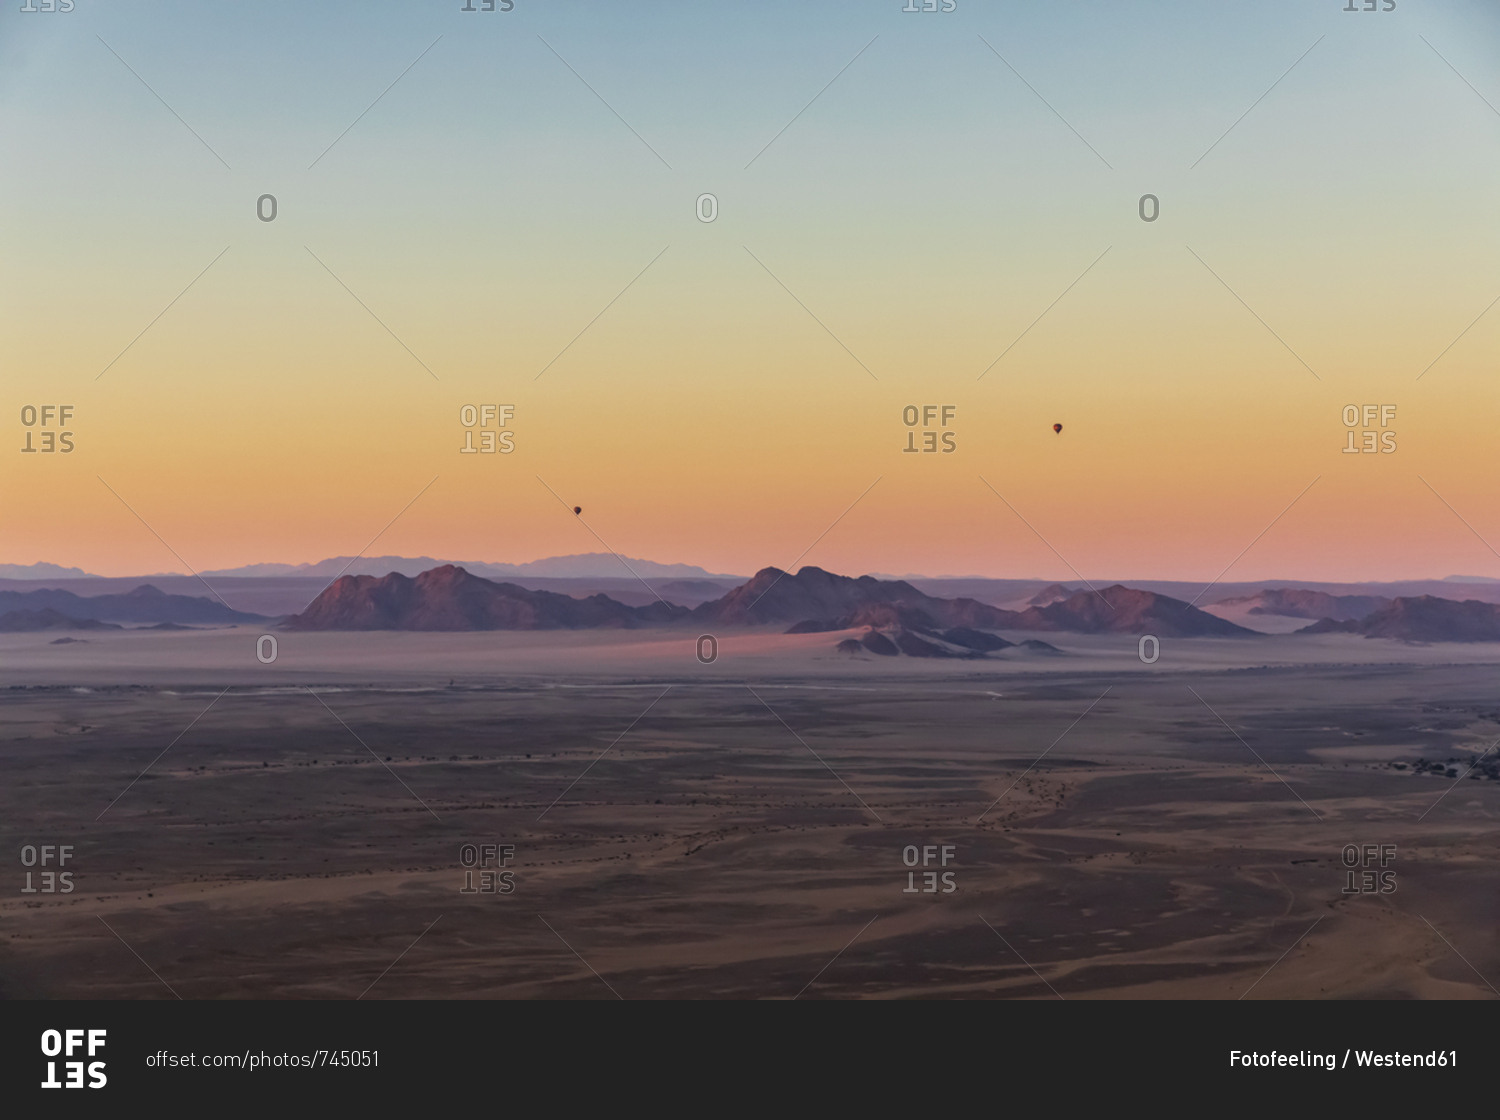 Africa- Namibia- Namib desert- Namib-Naukluft National Park- Aerial view of desert dunes in the morning light- air balloons